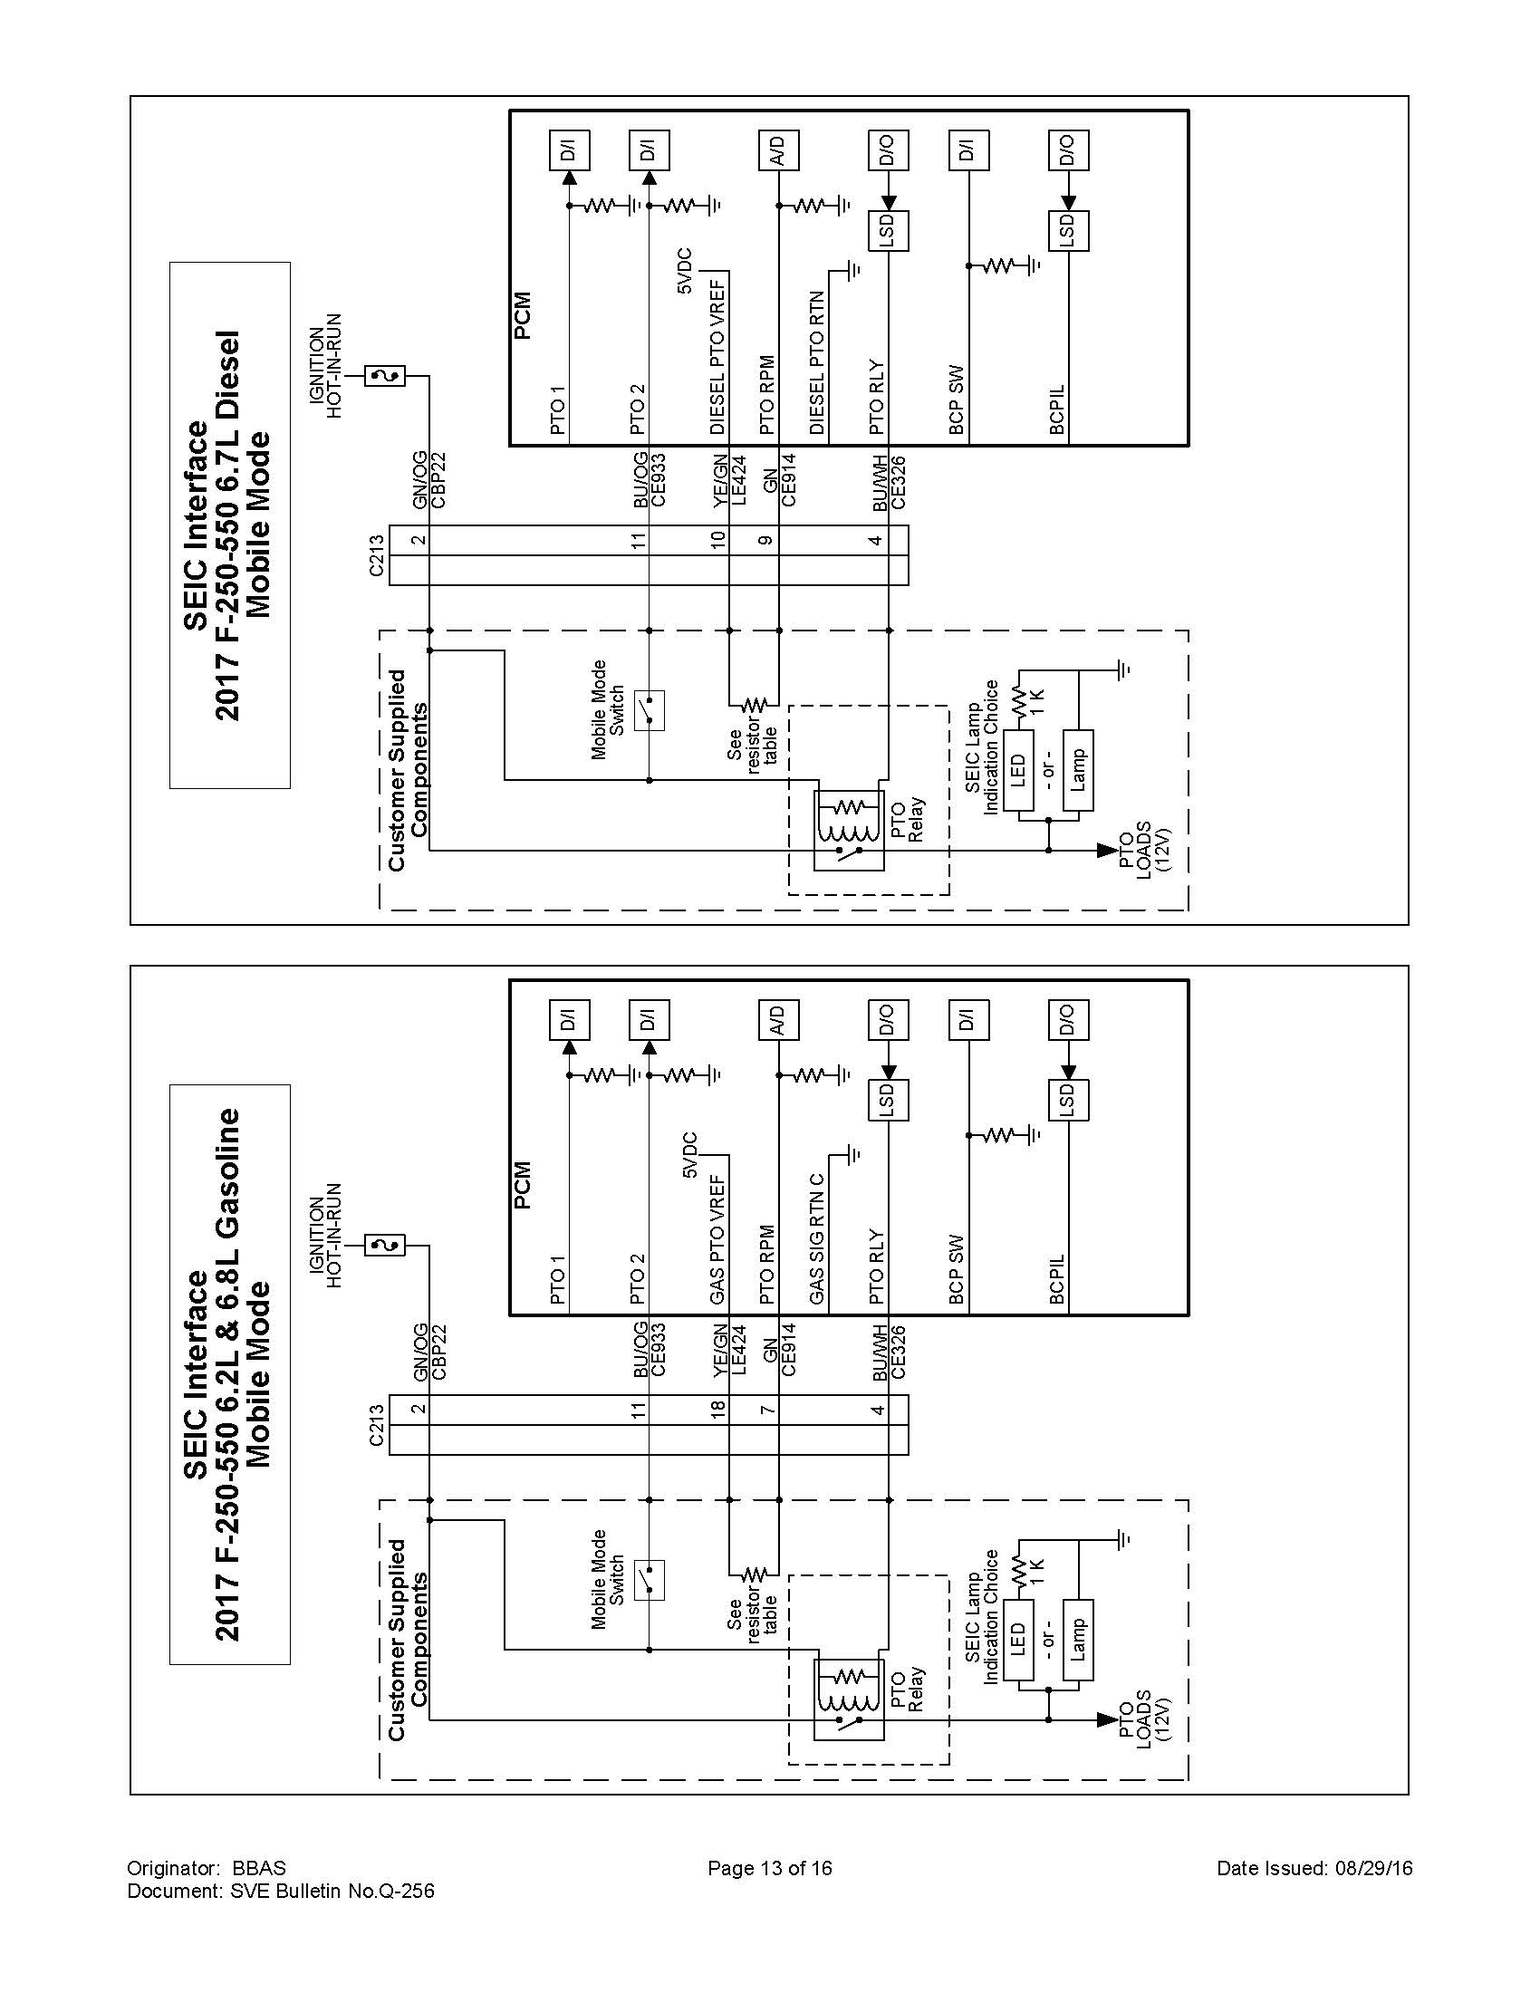 ford fleet 2008 pto wiring diagram